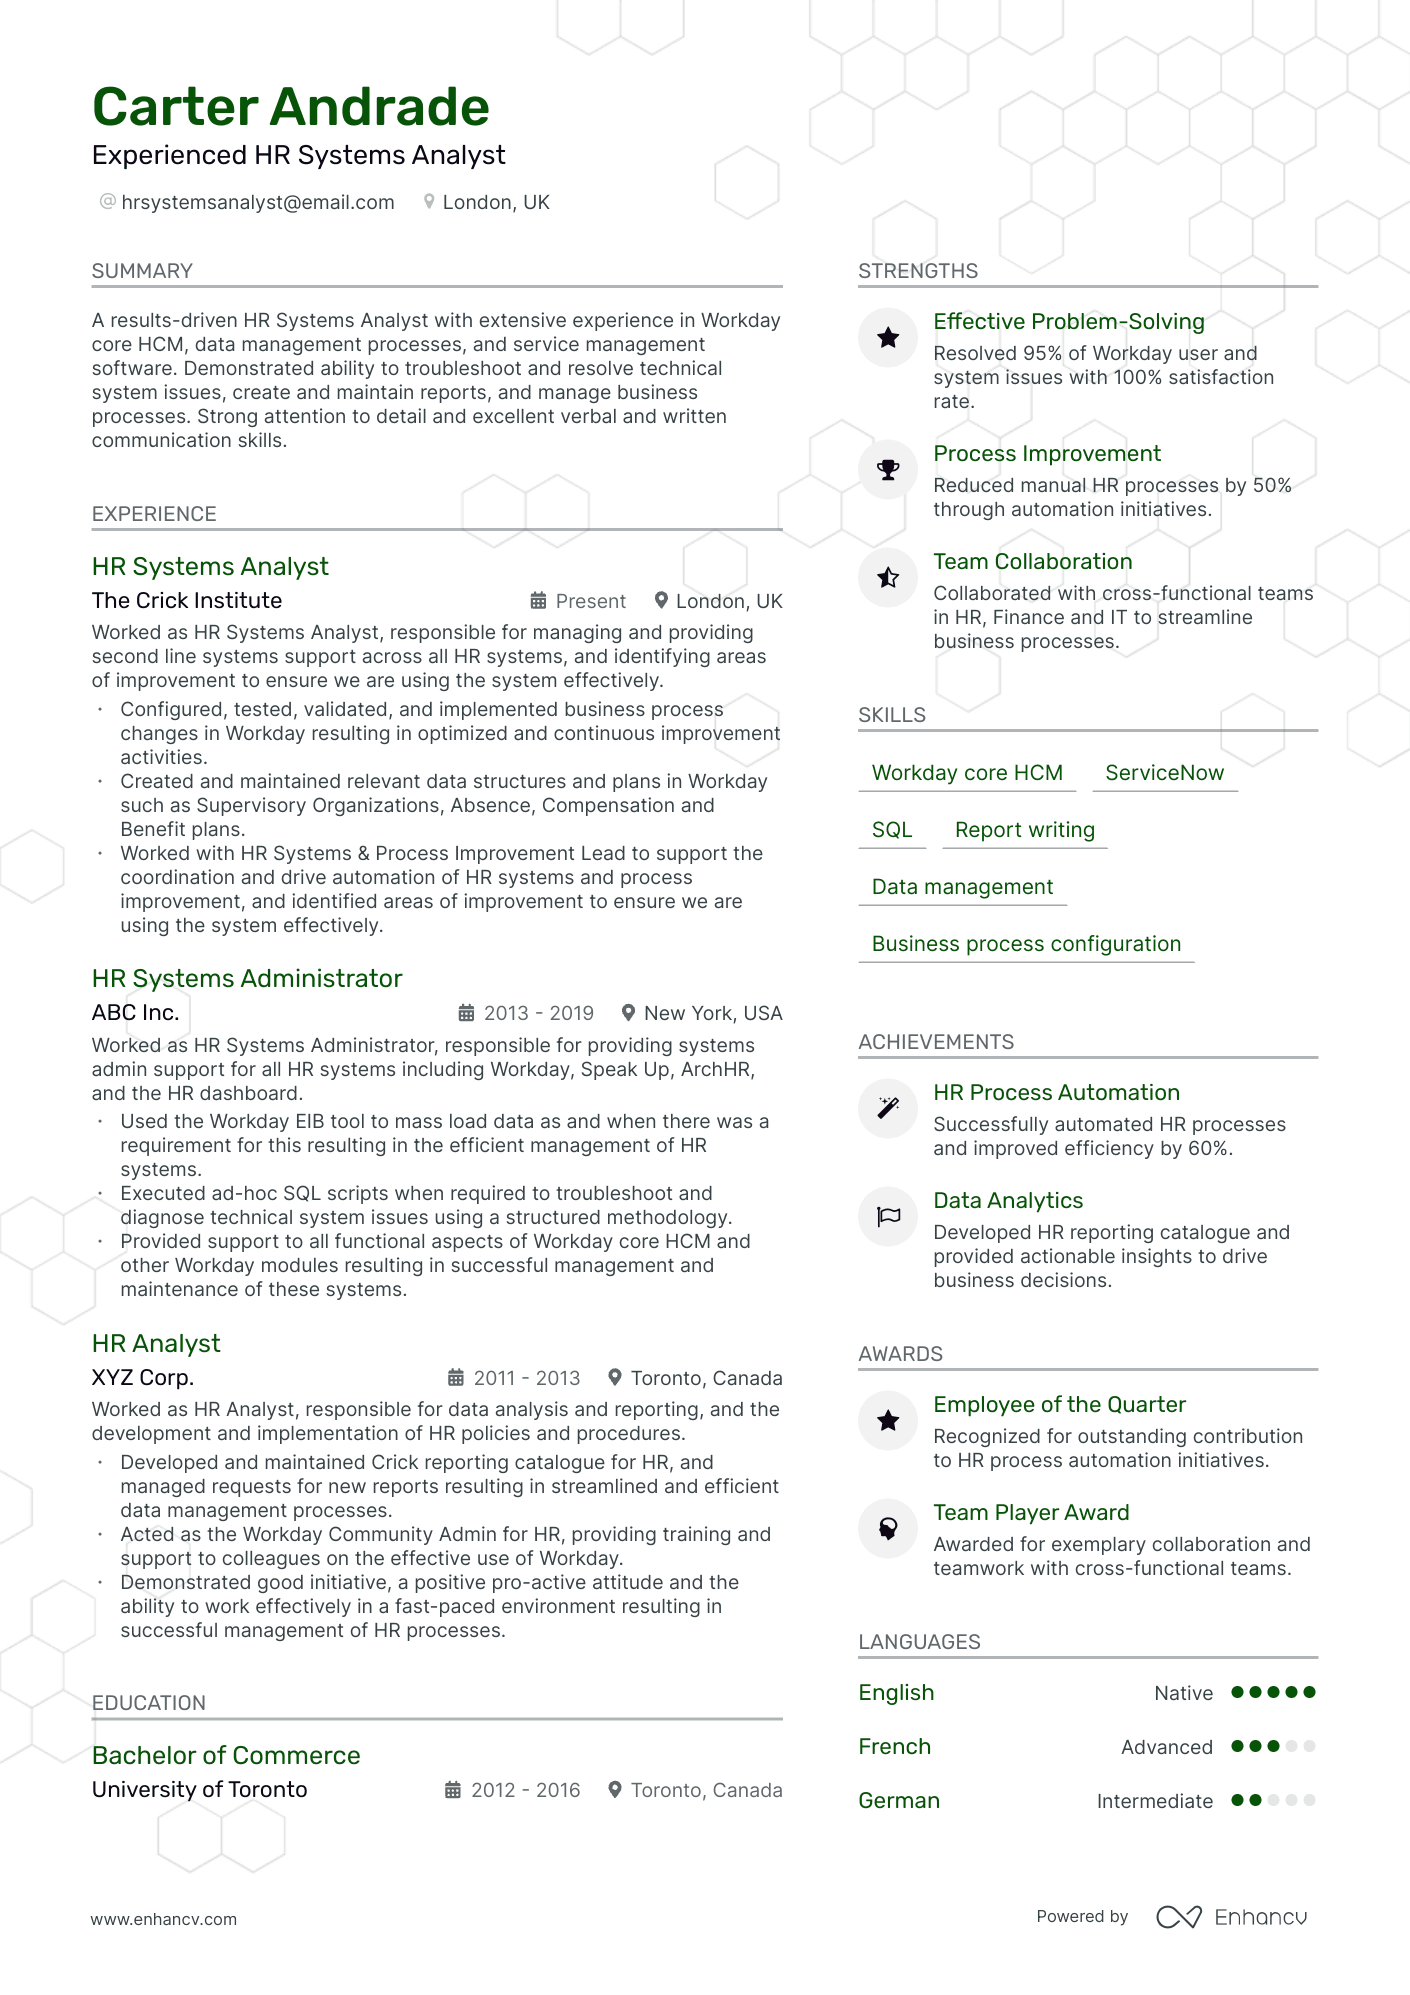 HR Analyst resume example